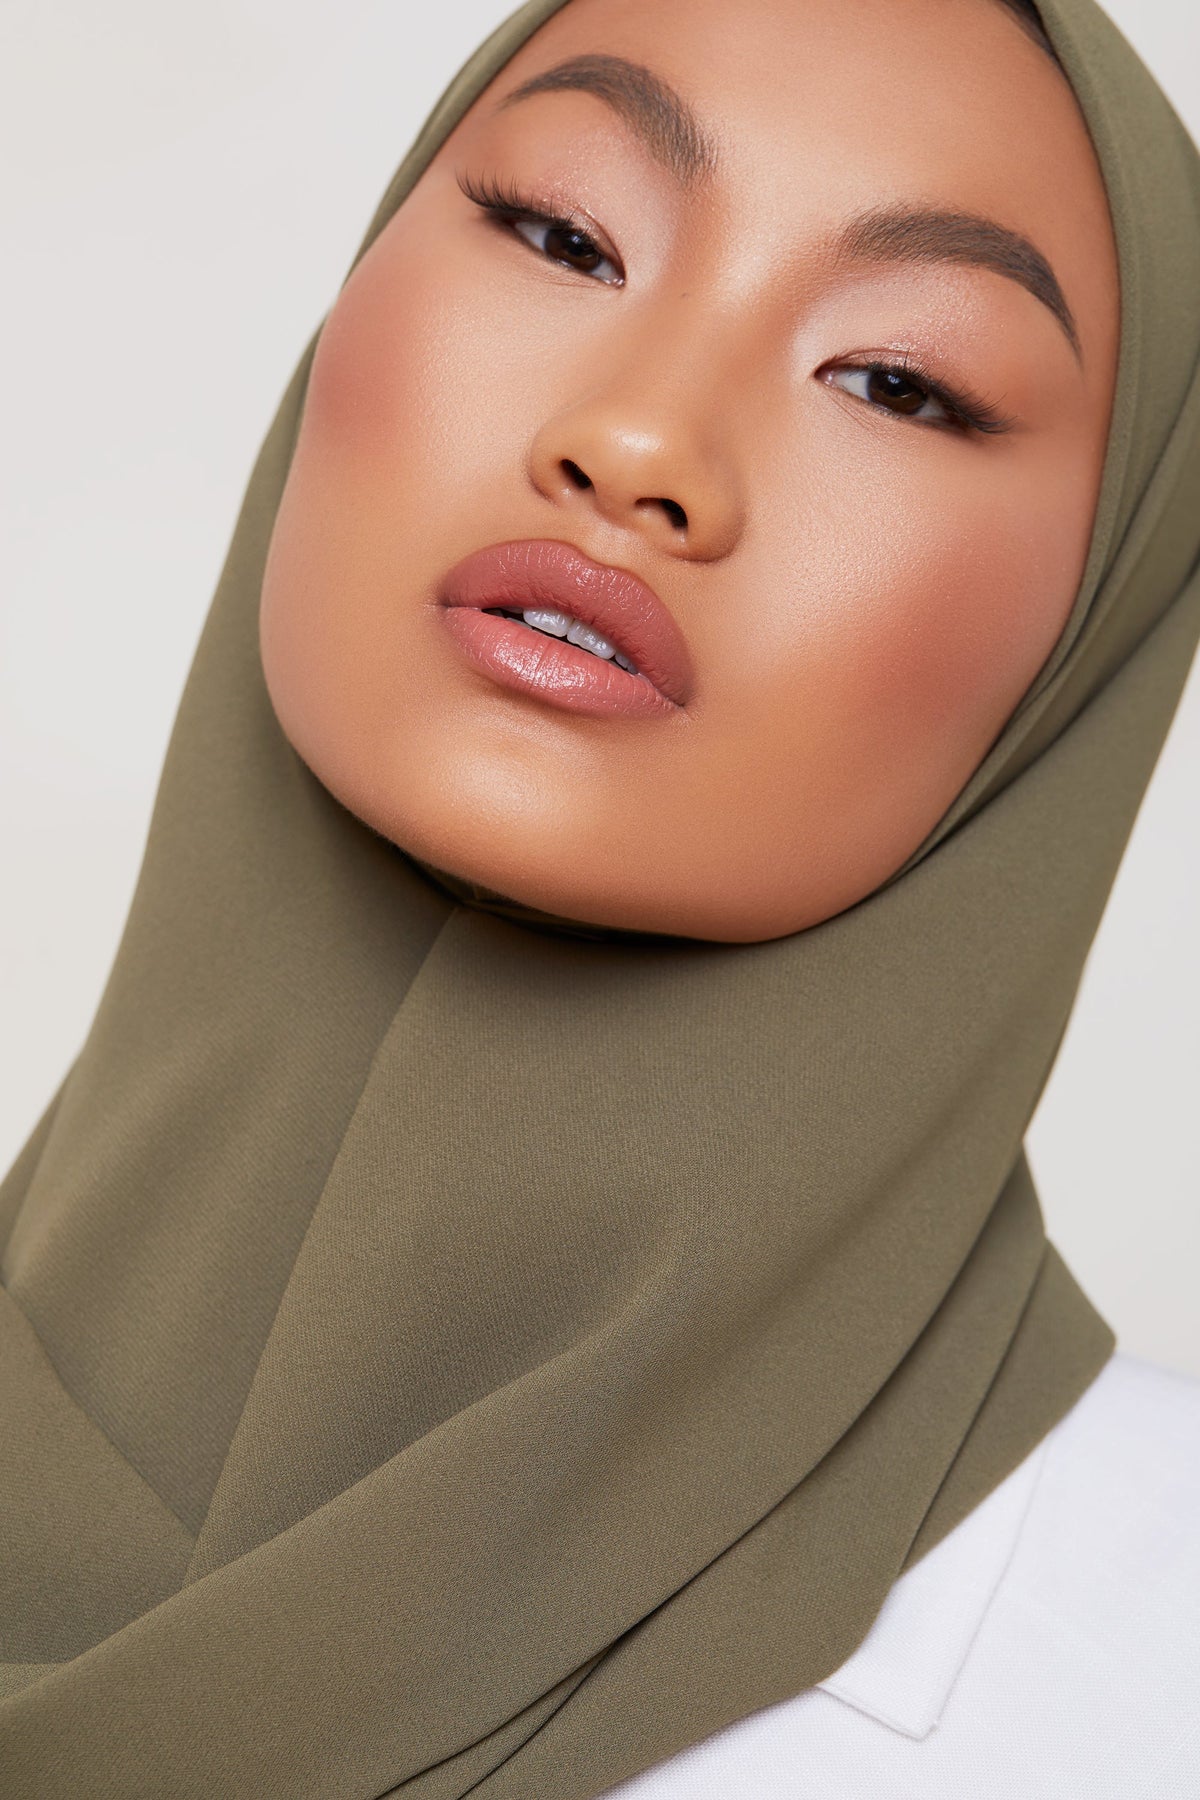 TEXTURE Classic Chiffon Hijab - Khaki Green epschoolboard 